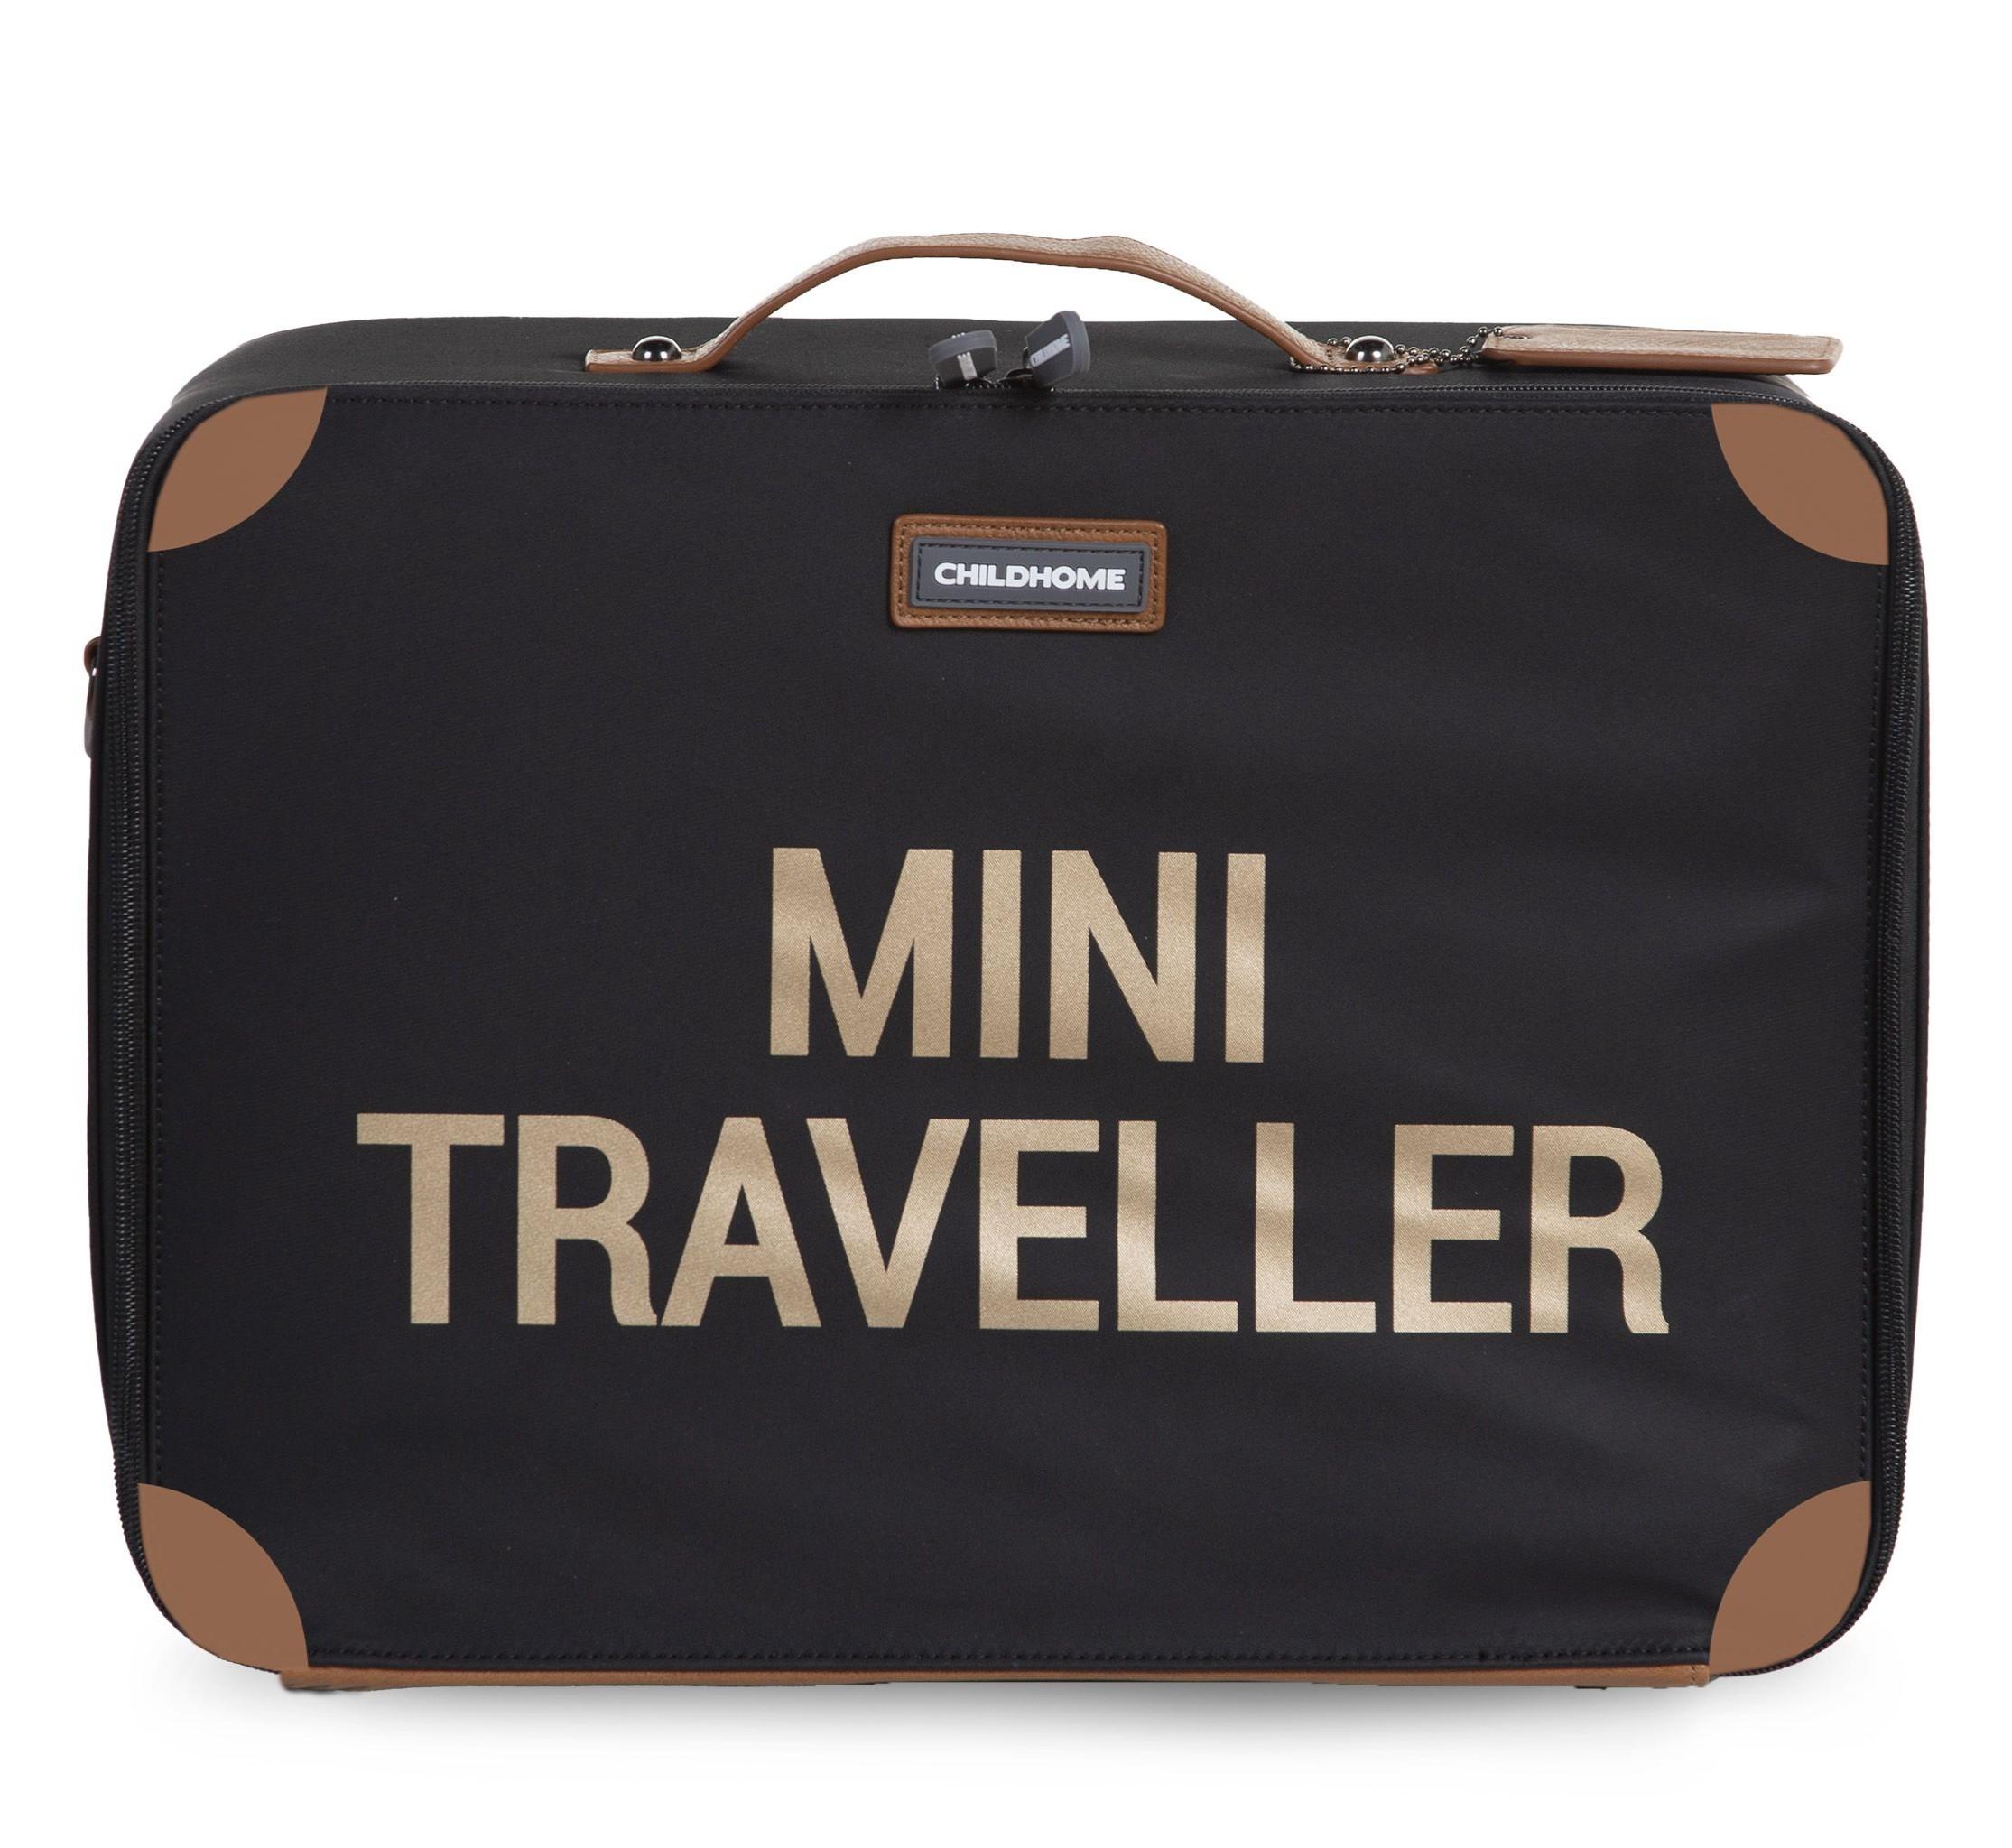 Childhome - Mini traveller valiesje zwart/goud